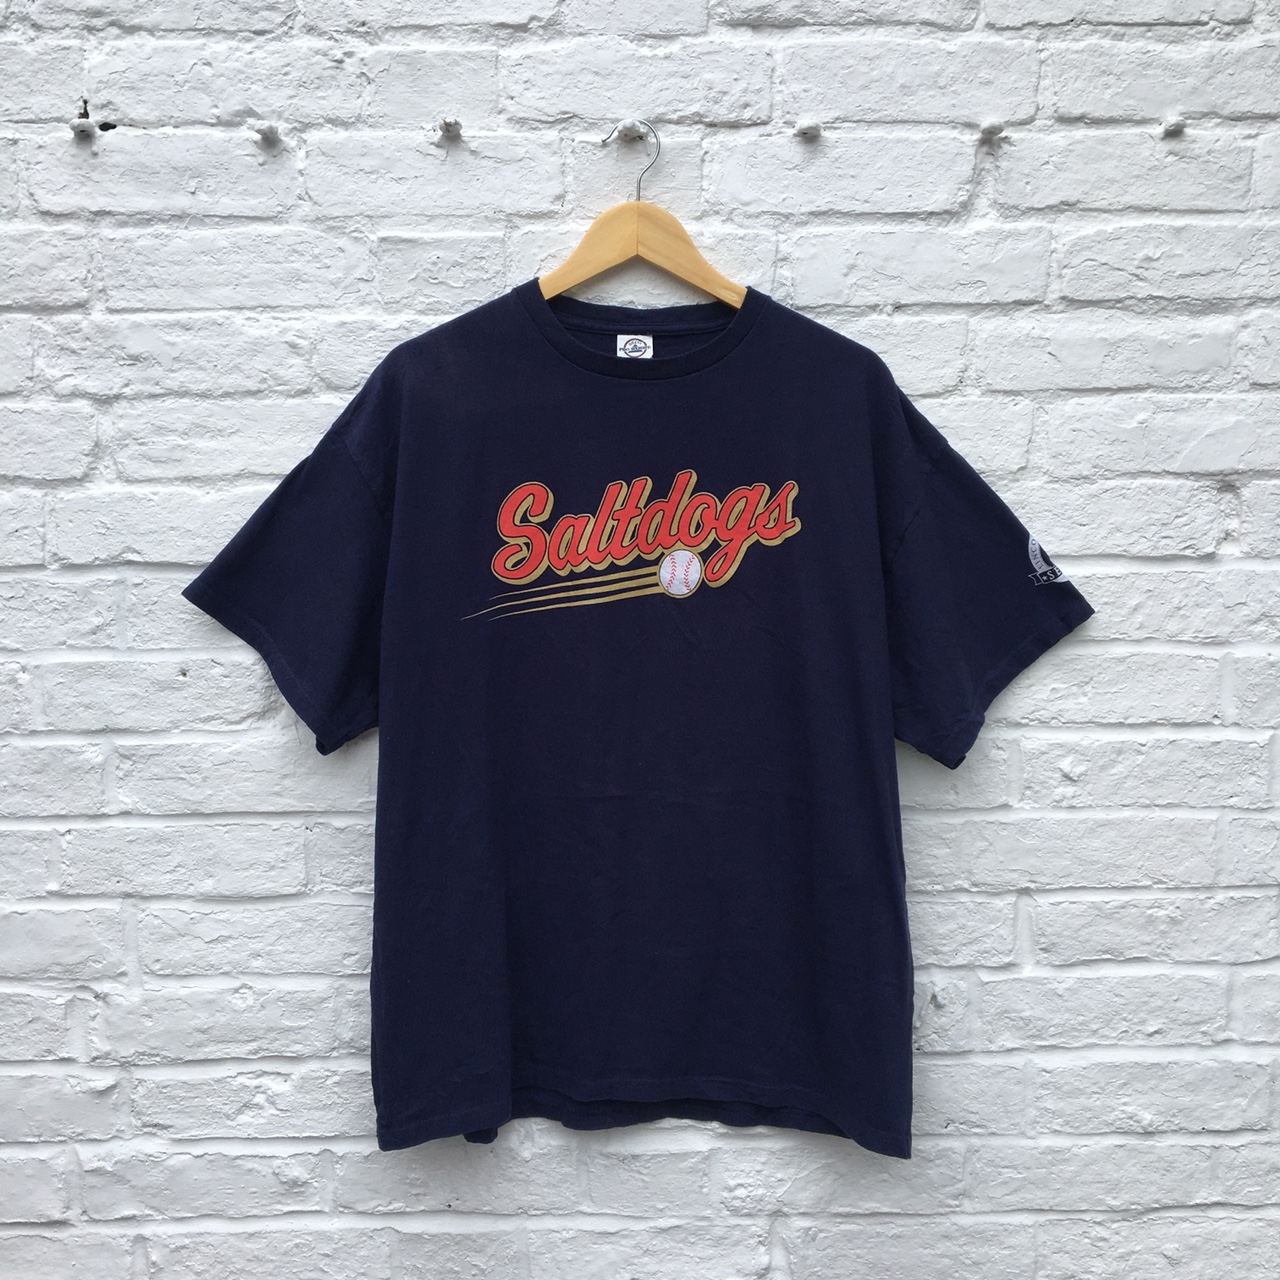 Lincoln Saltdogs T-Shirt (xl) - Maerl Vintage